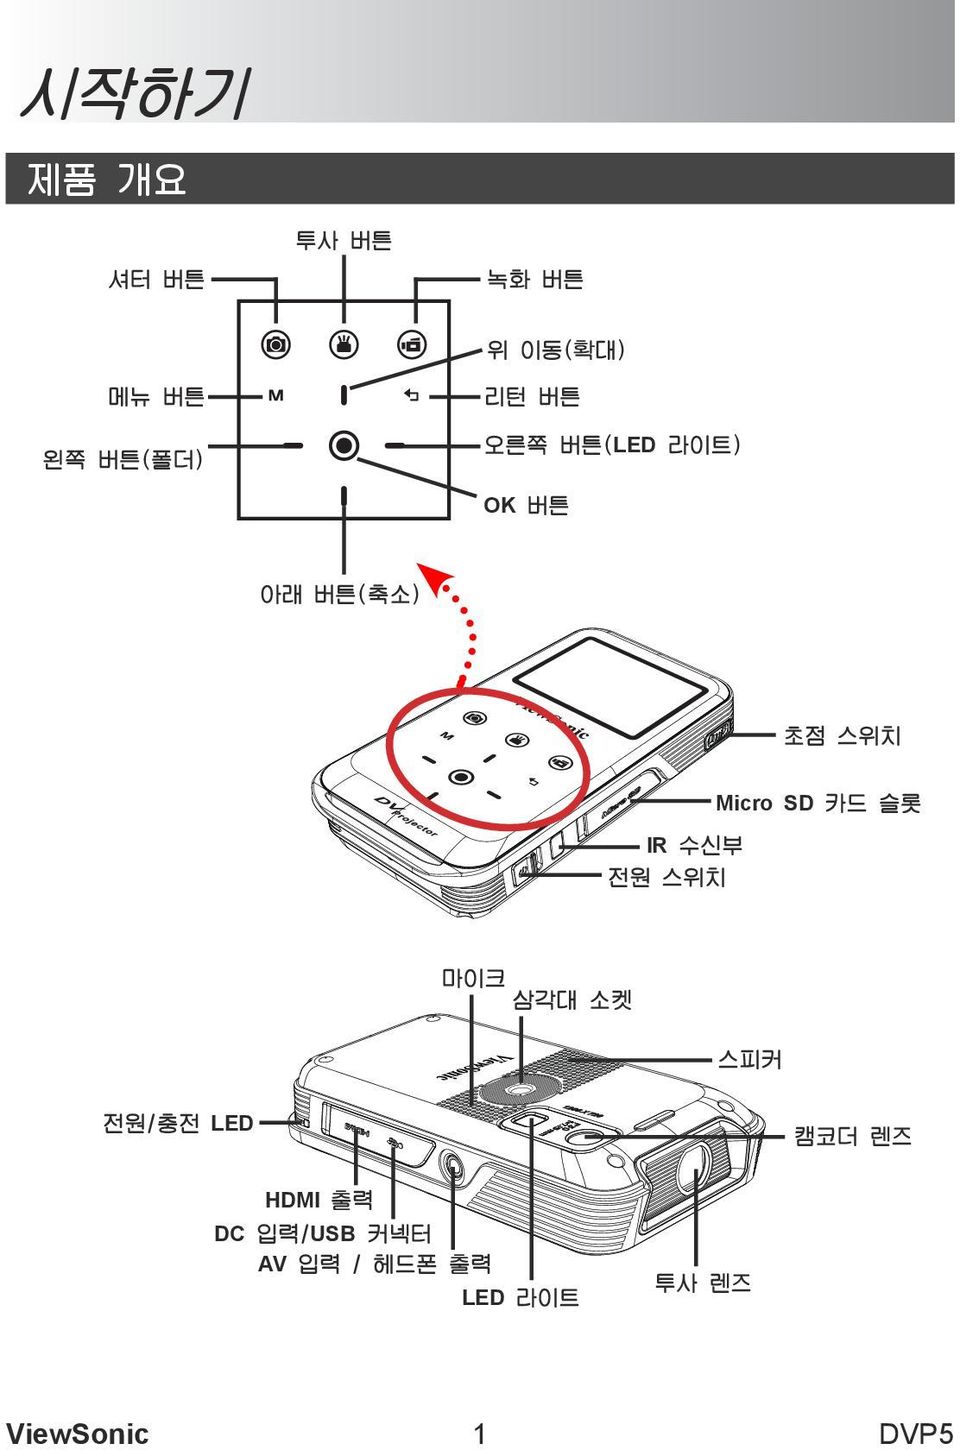 Micro SD 카드 슬롯 마이크 삼각대 소켓 스피커 전원/충전 LED 캠코더 렌즈 HDMI 출력